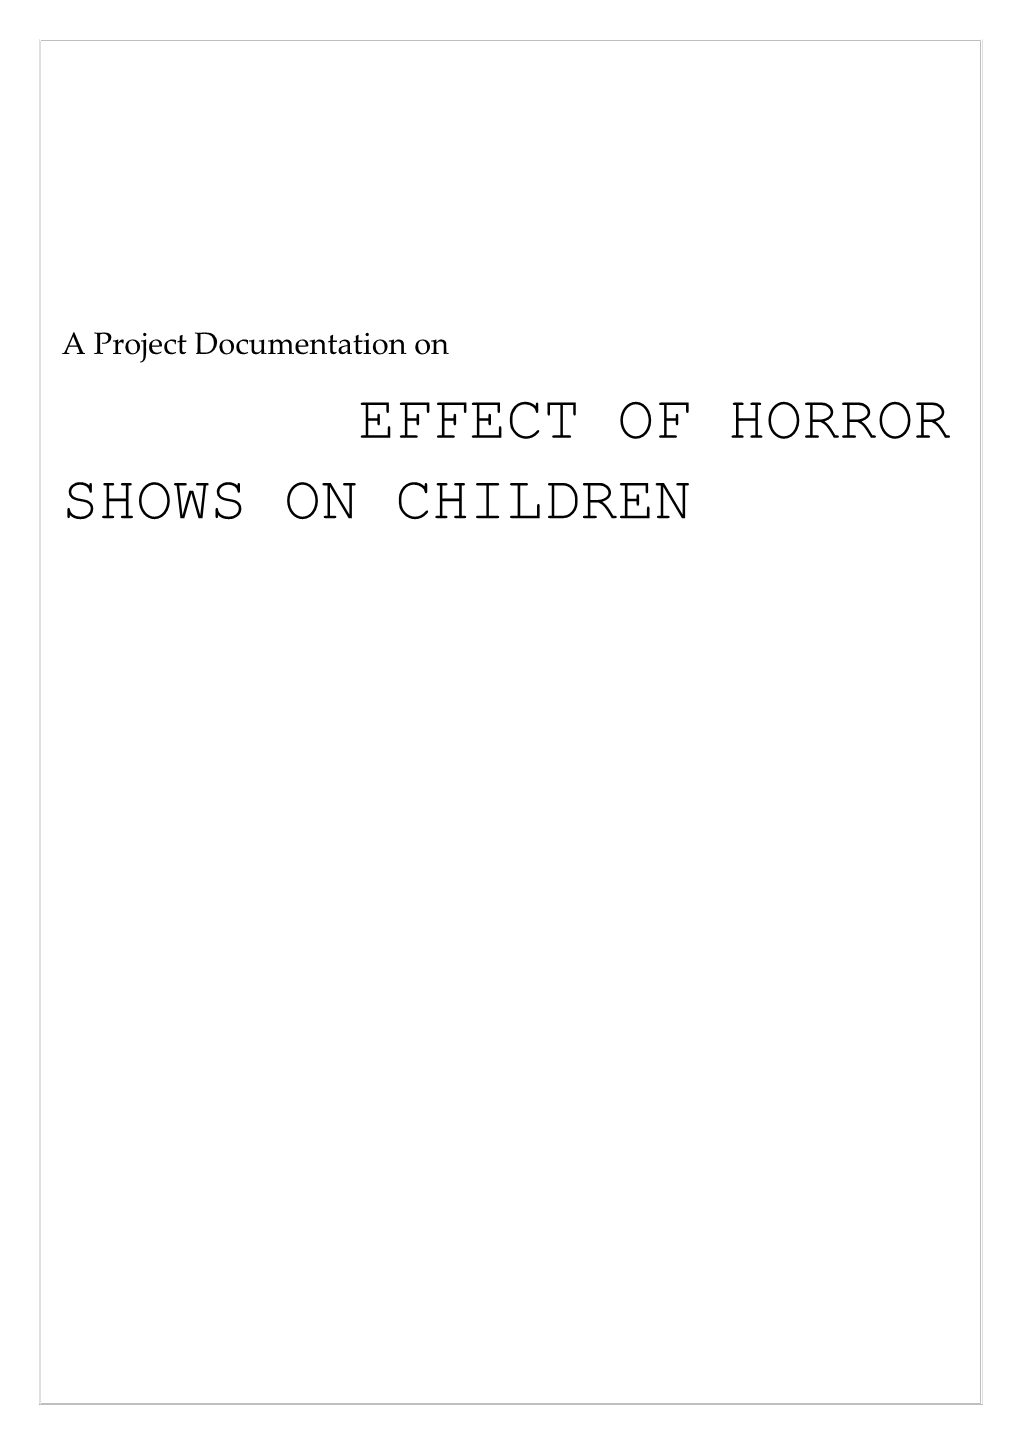 Effect of Horror Shows on Children